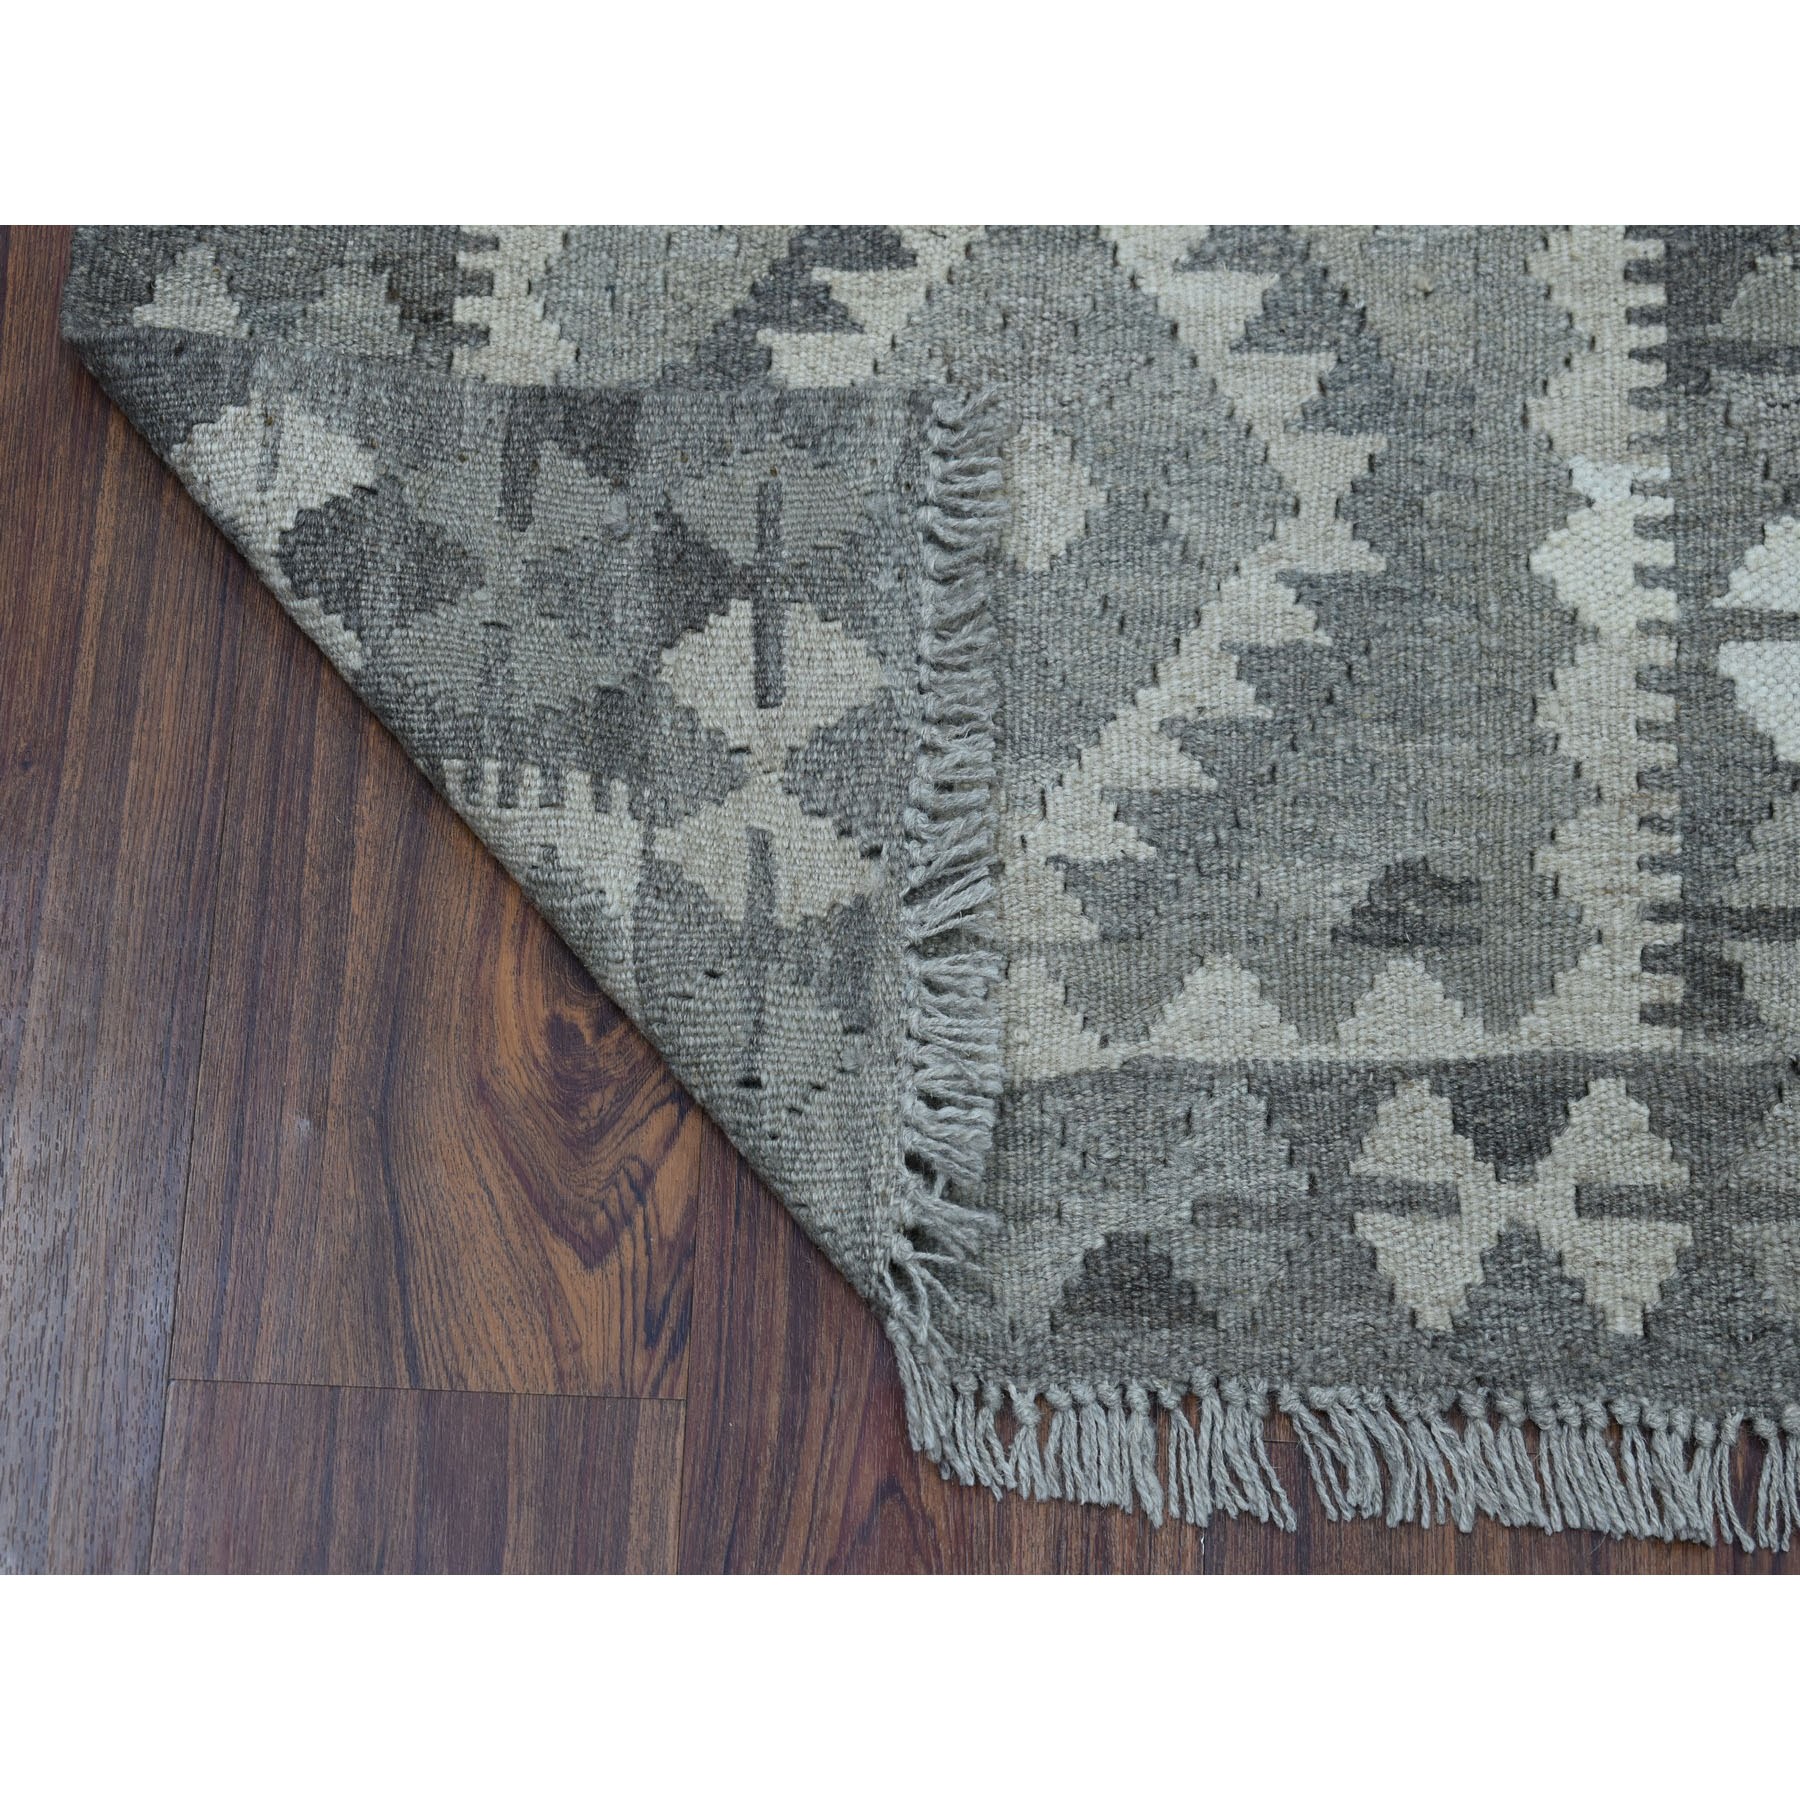 2-1 x6-7  Undyed Natural Wool Afghan Kilim Reversible Hand Woven Runner Oriental Rug 